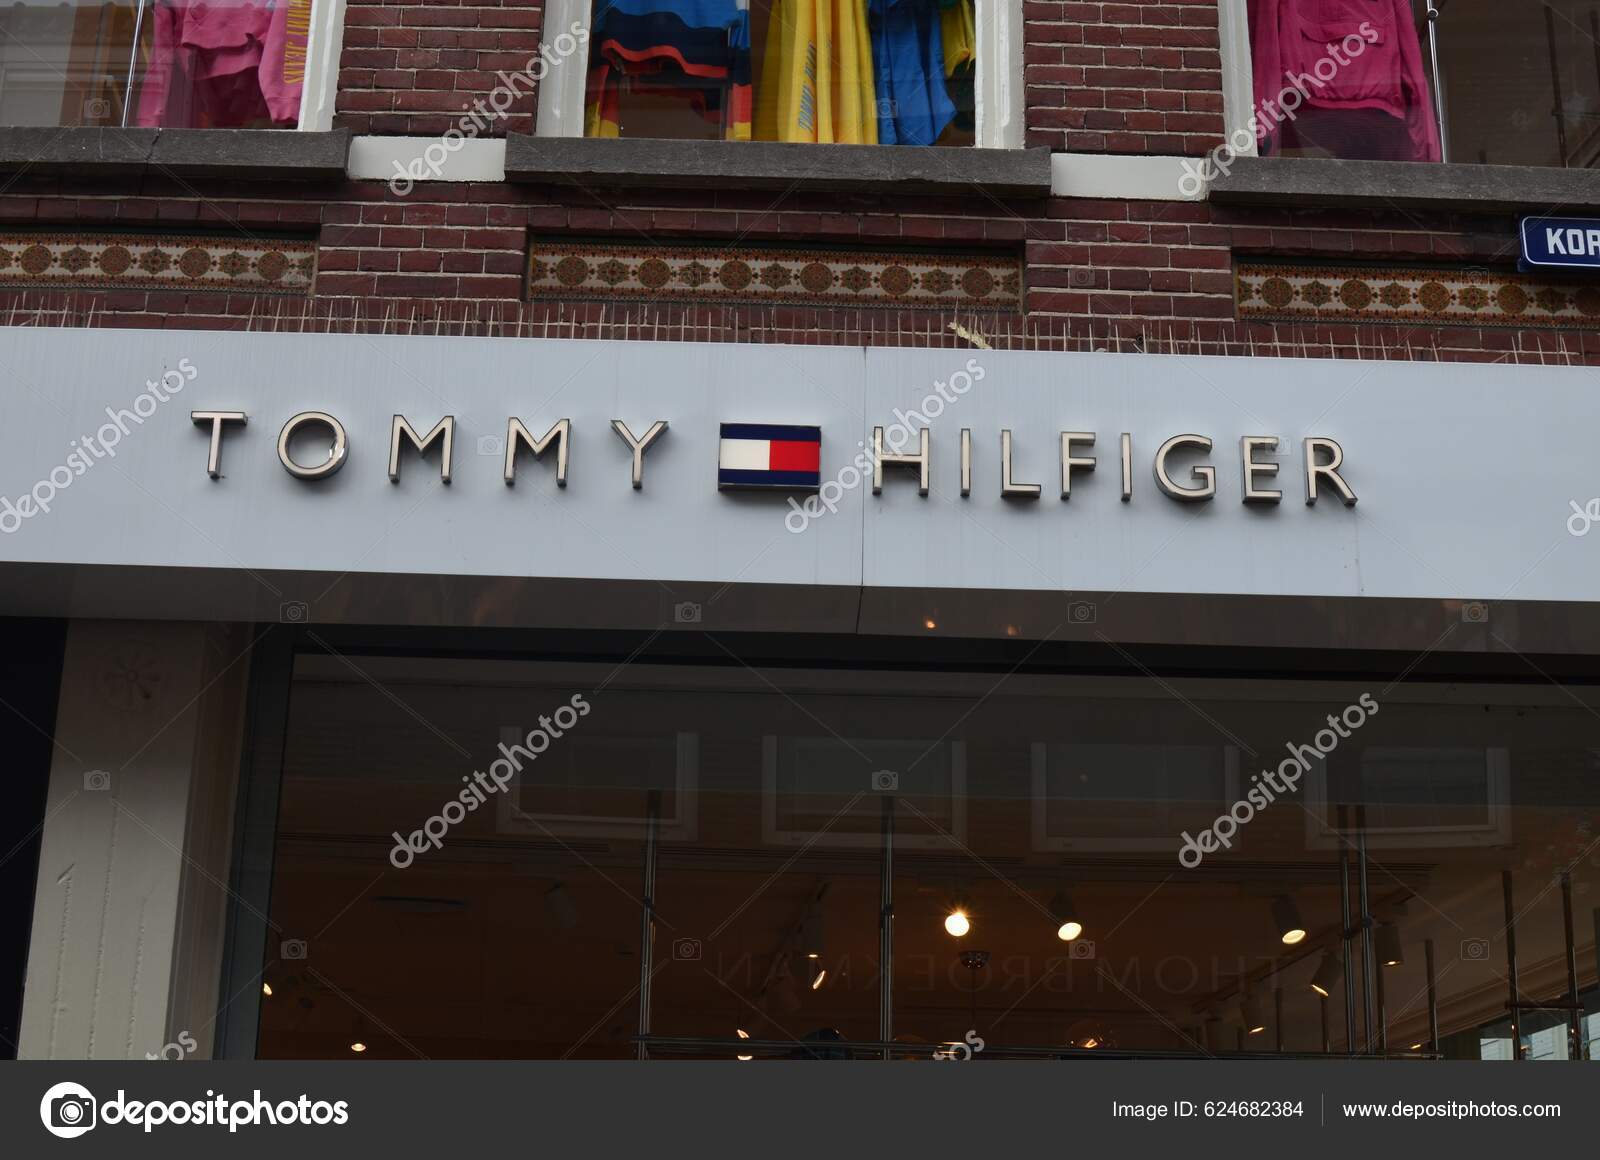 Tommy hilfiger logo Stock Photos, Royalty Free Tommy hilfiger logo Images |  Depositphotos